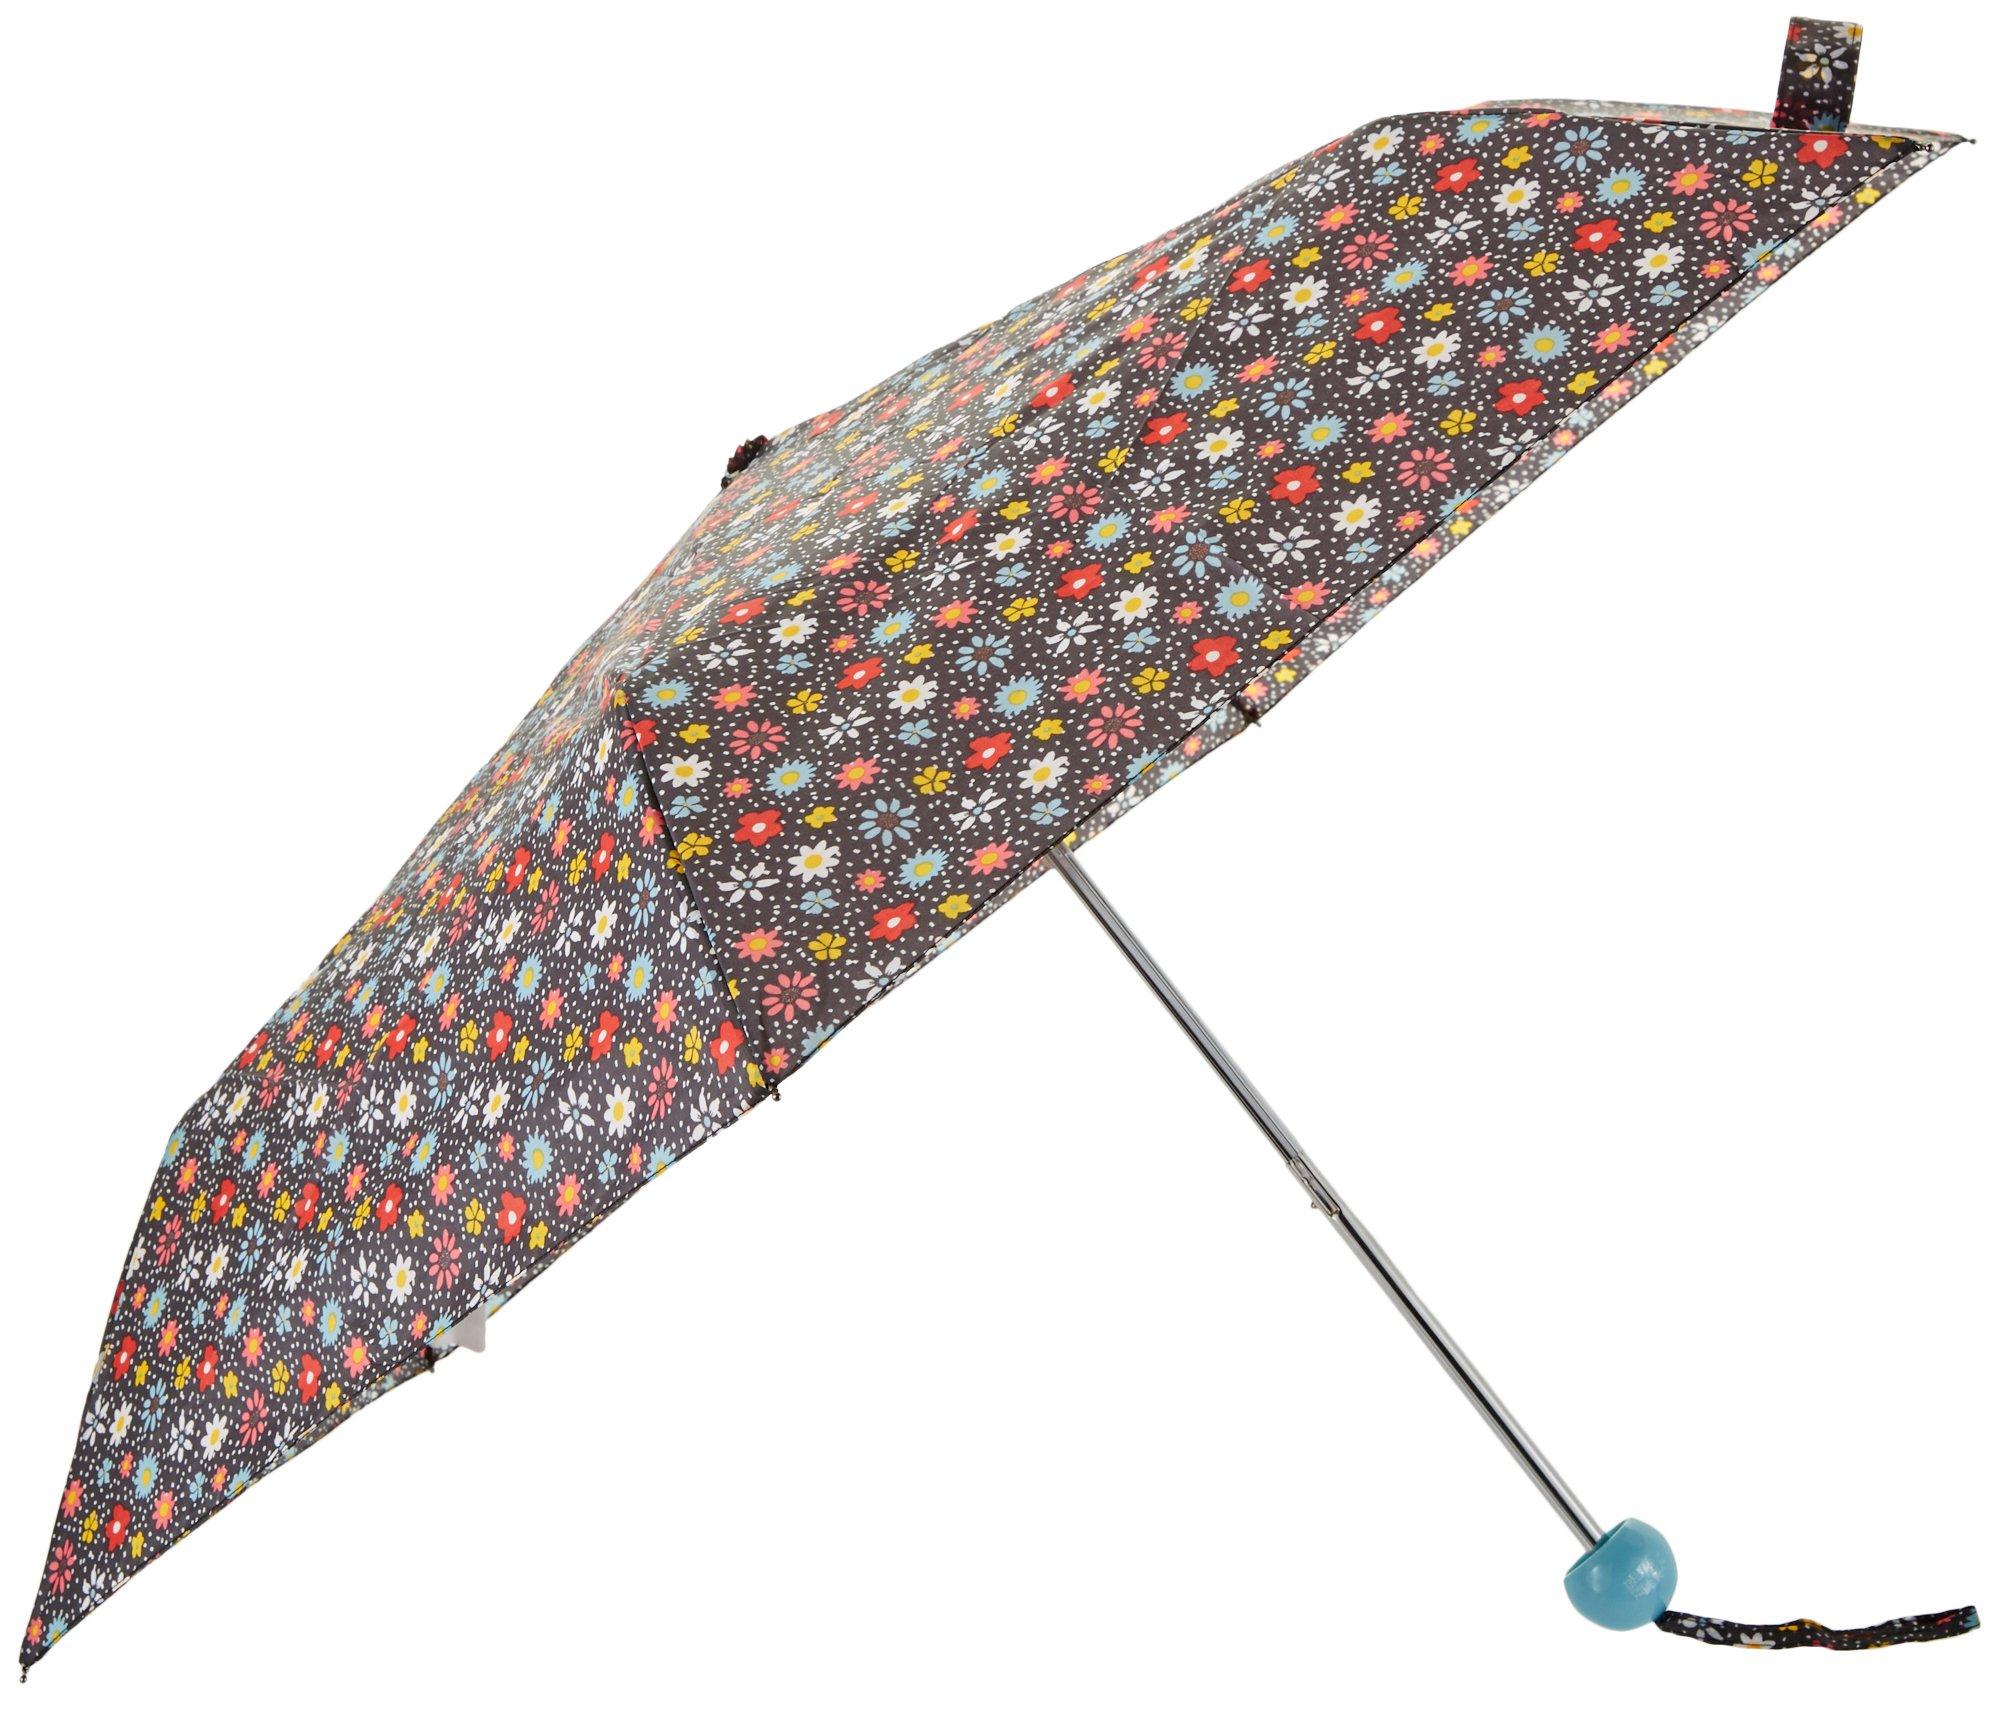 ShedRain Dotted Ditsy Mini Manual Umbrella